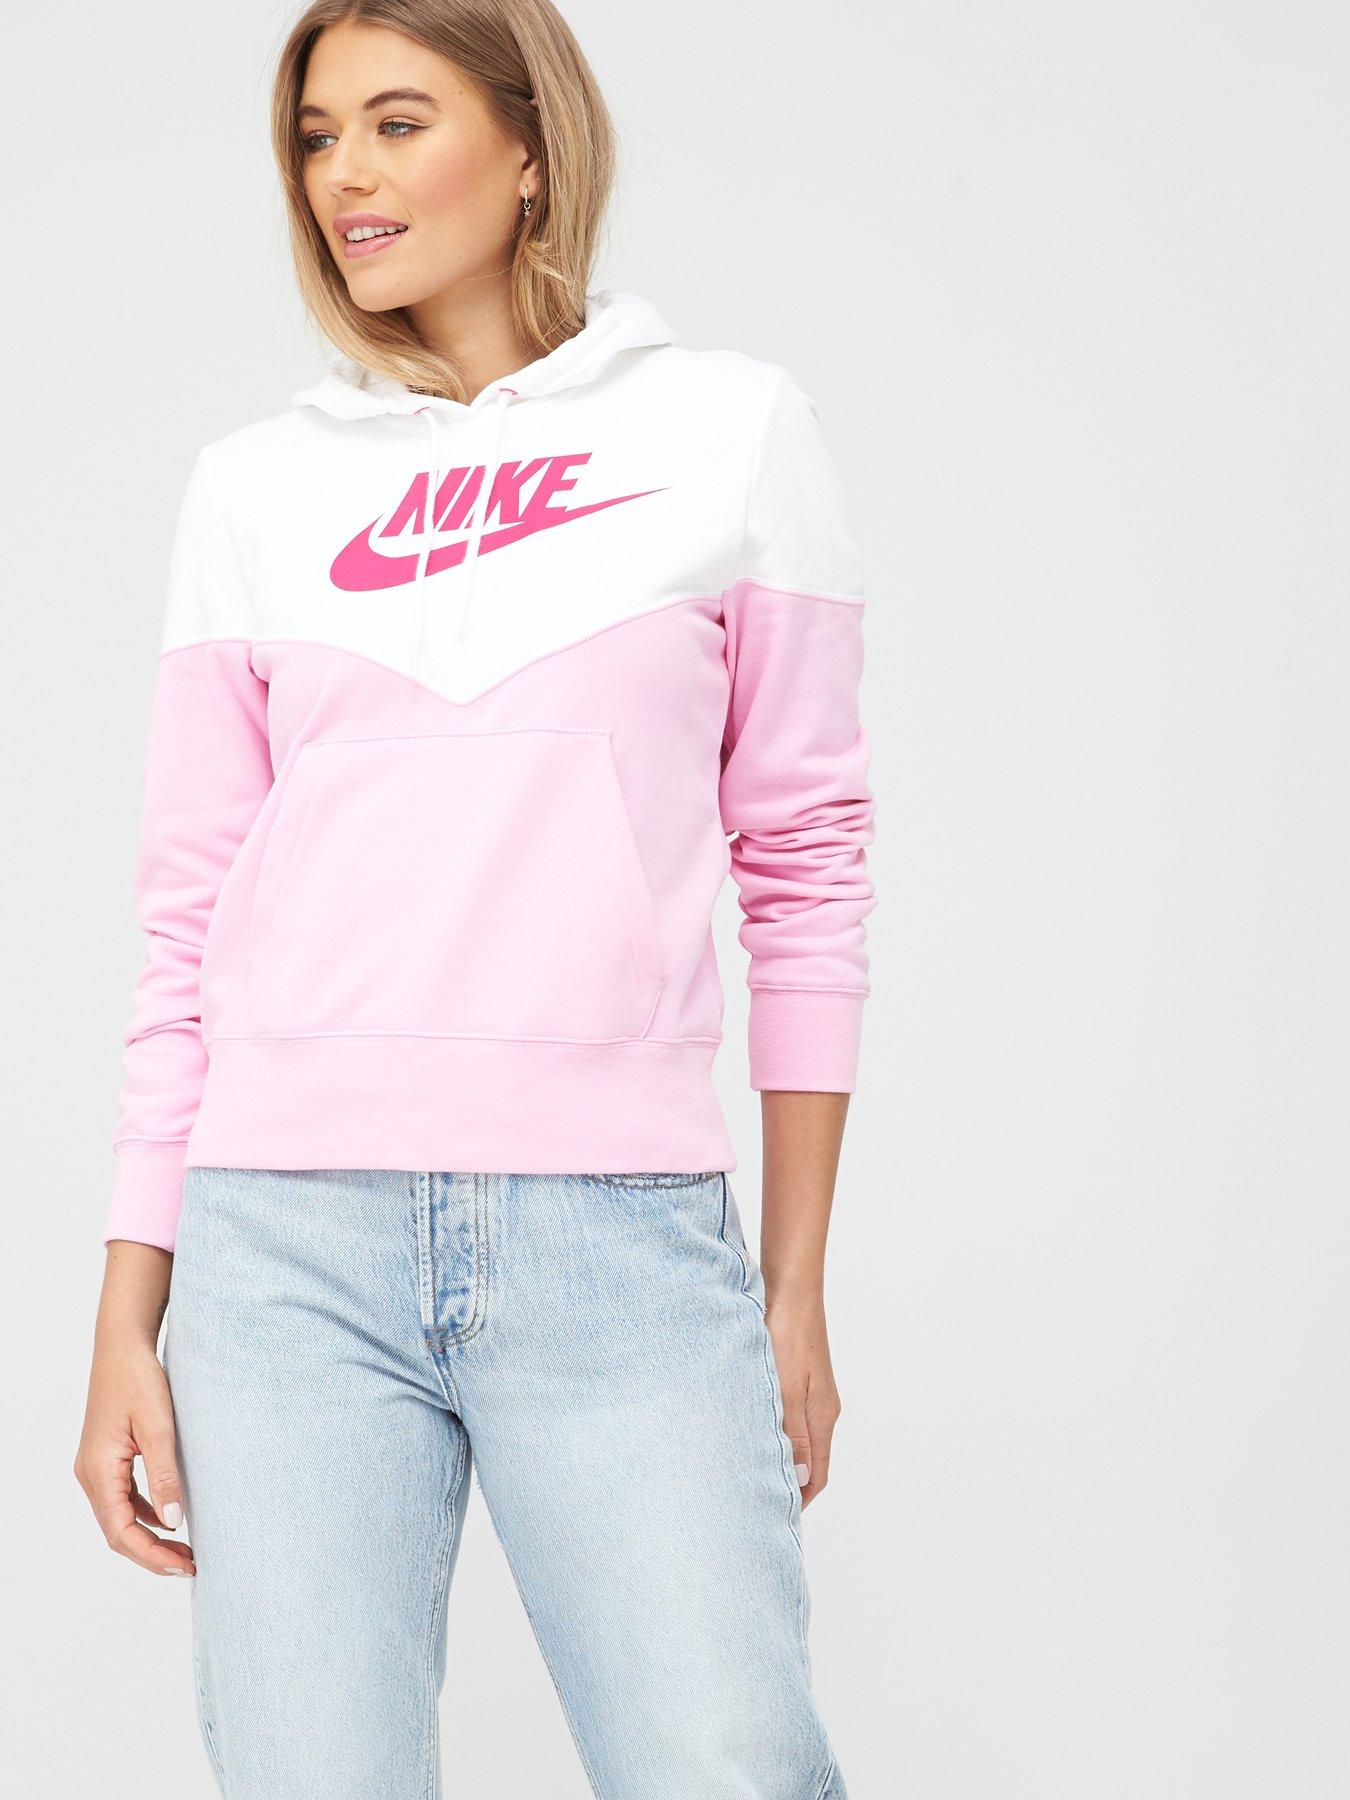 pink and white nike hoodie